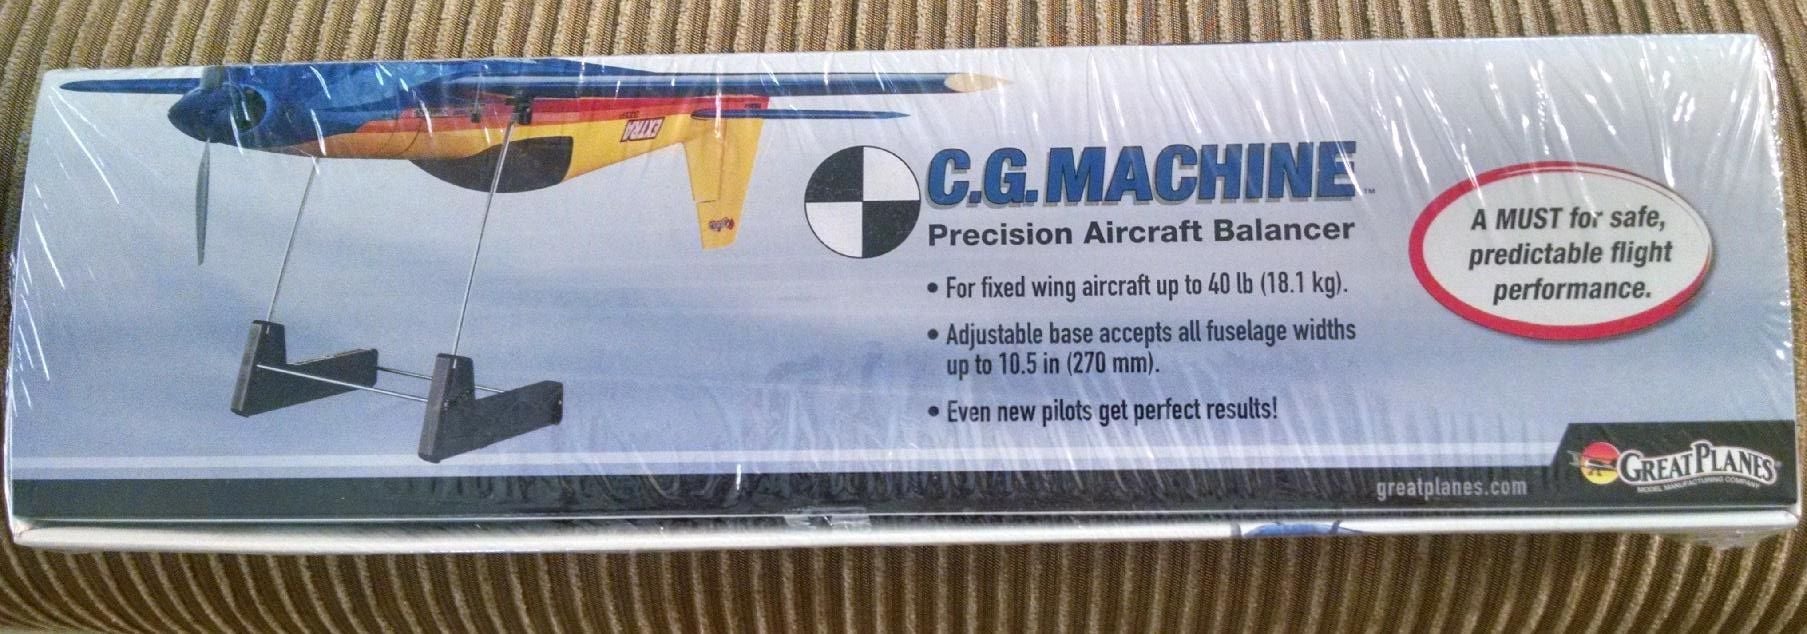 great planes cg machine